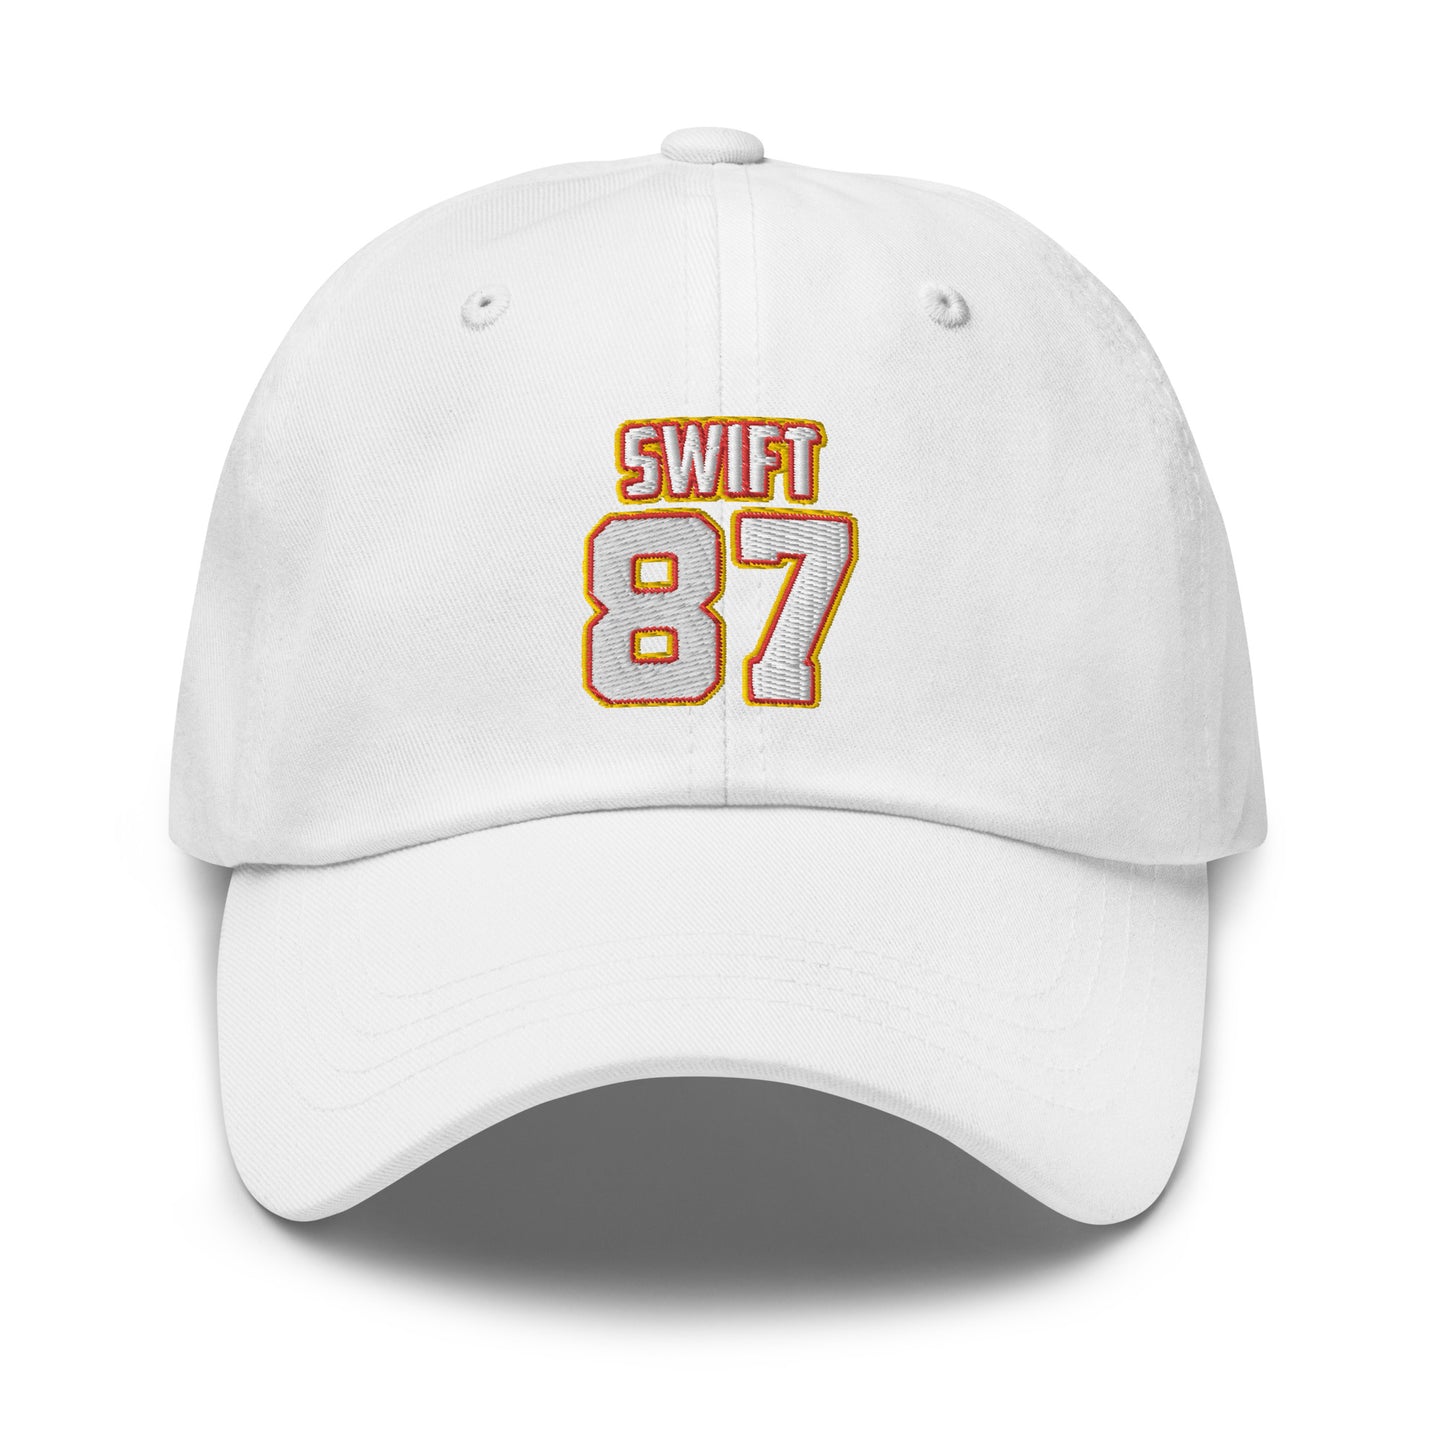 Swift 87 Adjustable Hat